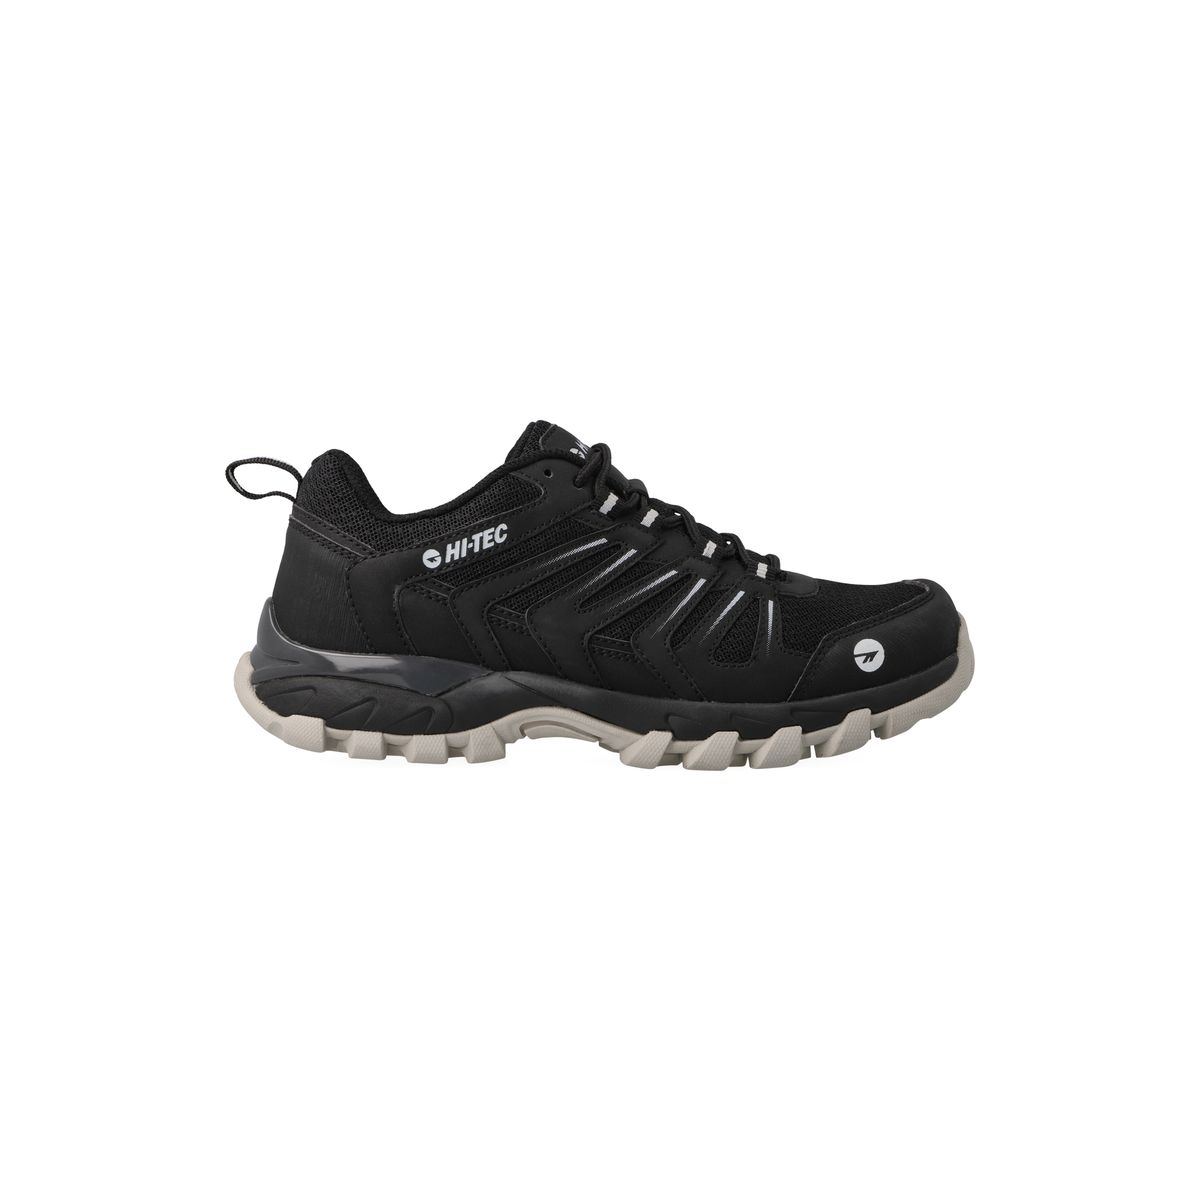 Hi-Tec Women's Grand Paradiso Low Hiking Shoes - Black/White | Shop ...